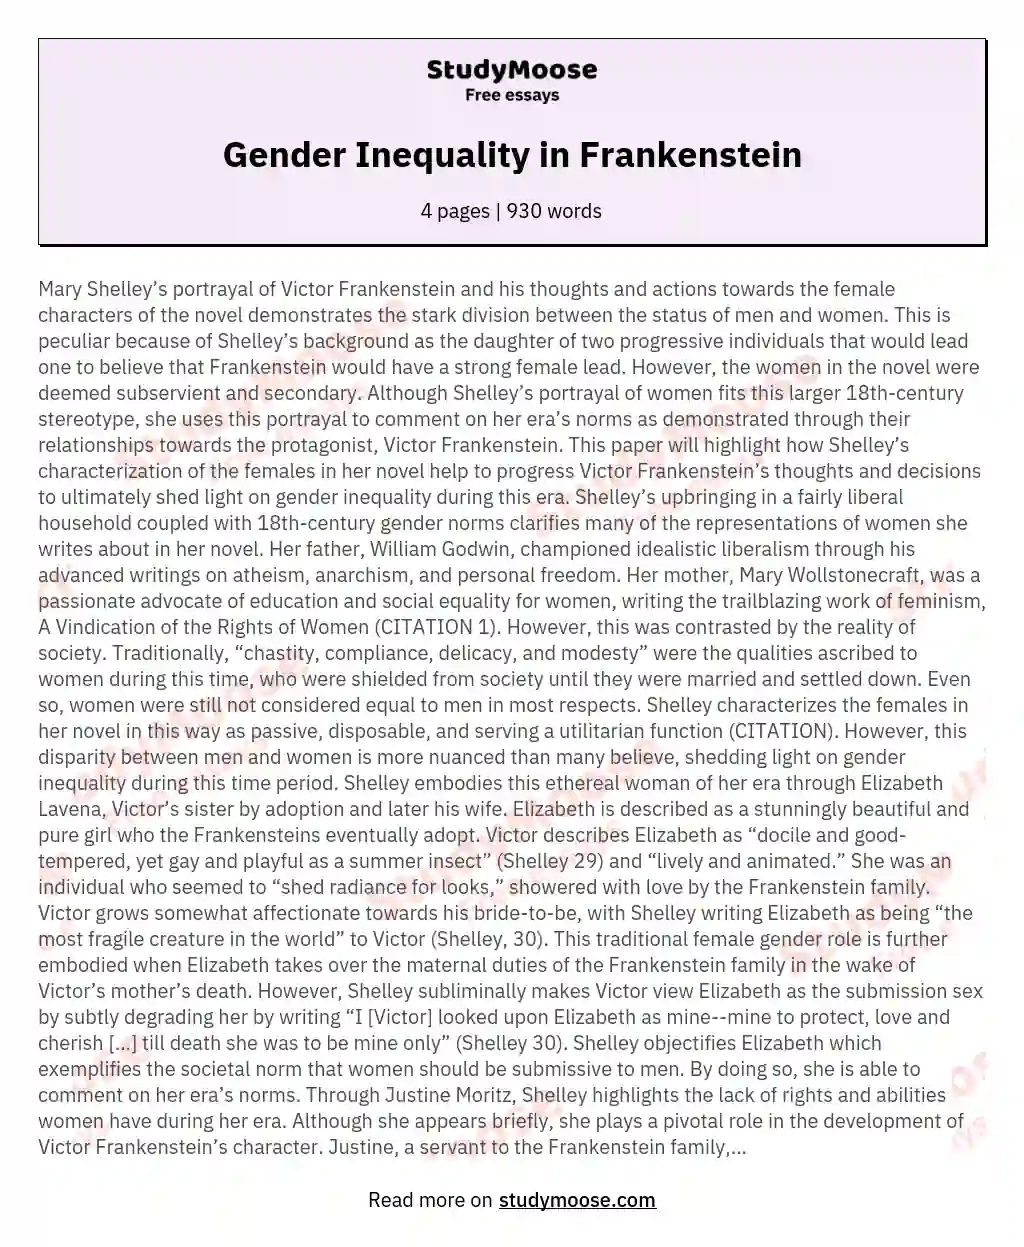 Gender Inequality in Frankenstein essay